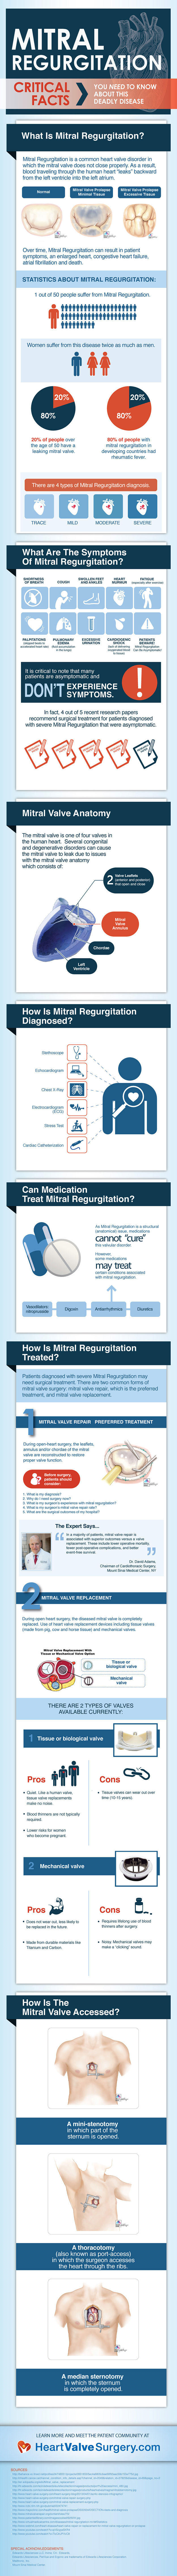 Mitral Valve Regurgitation Infographic